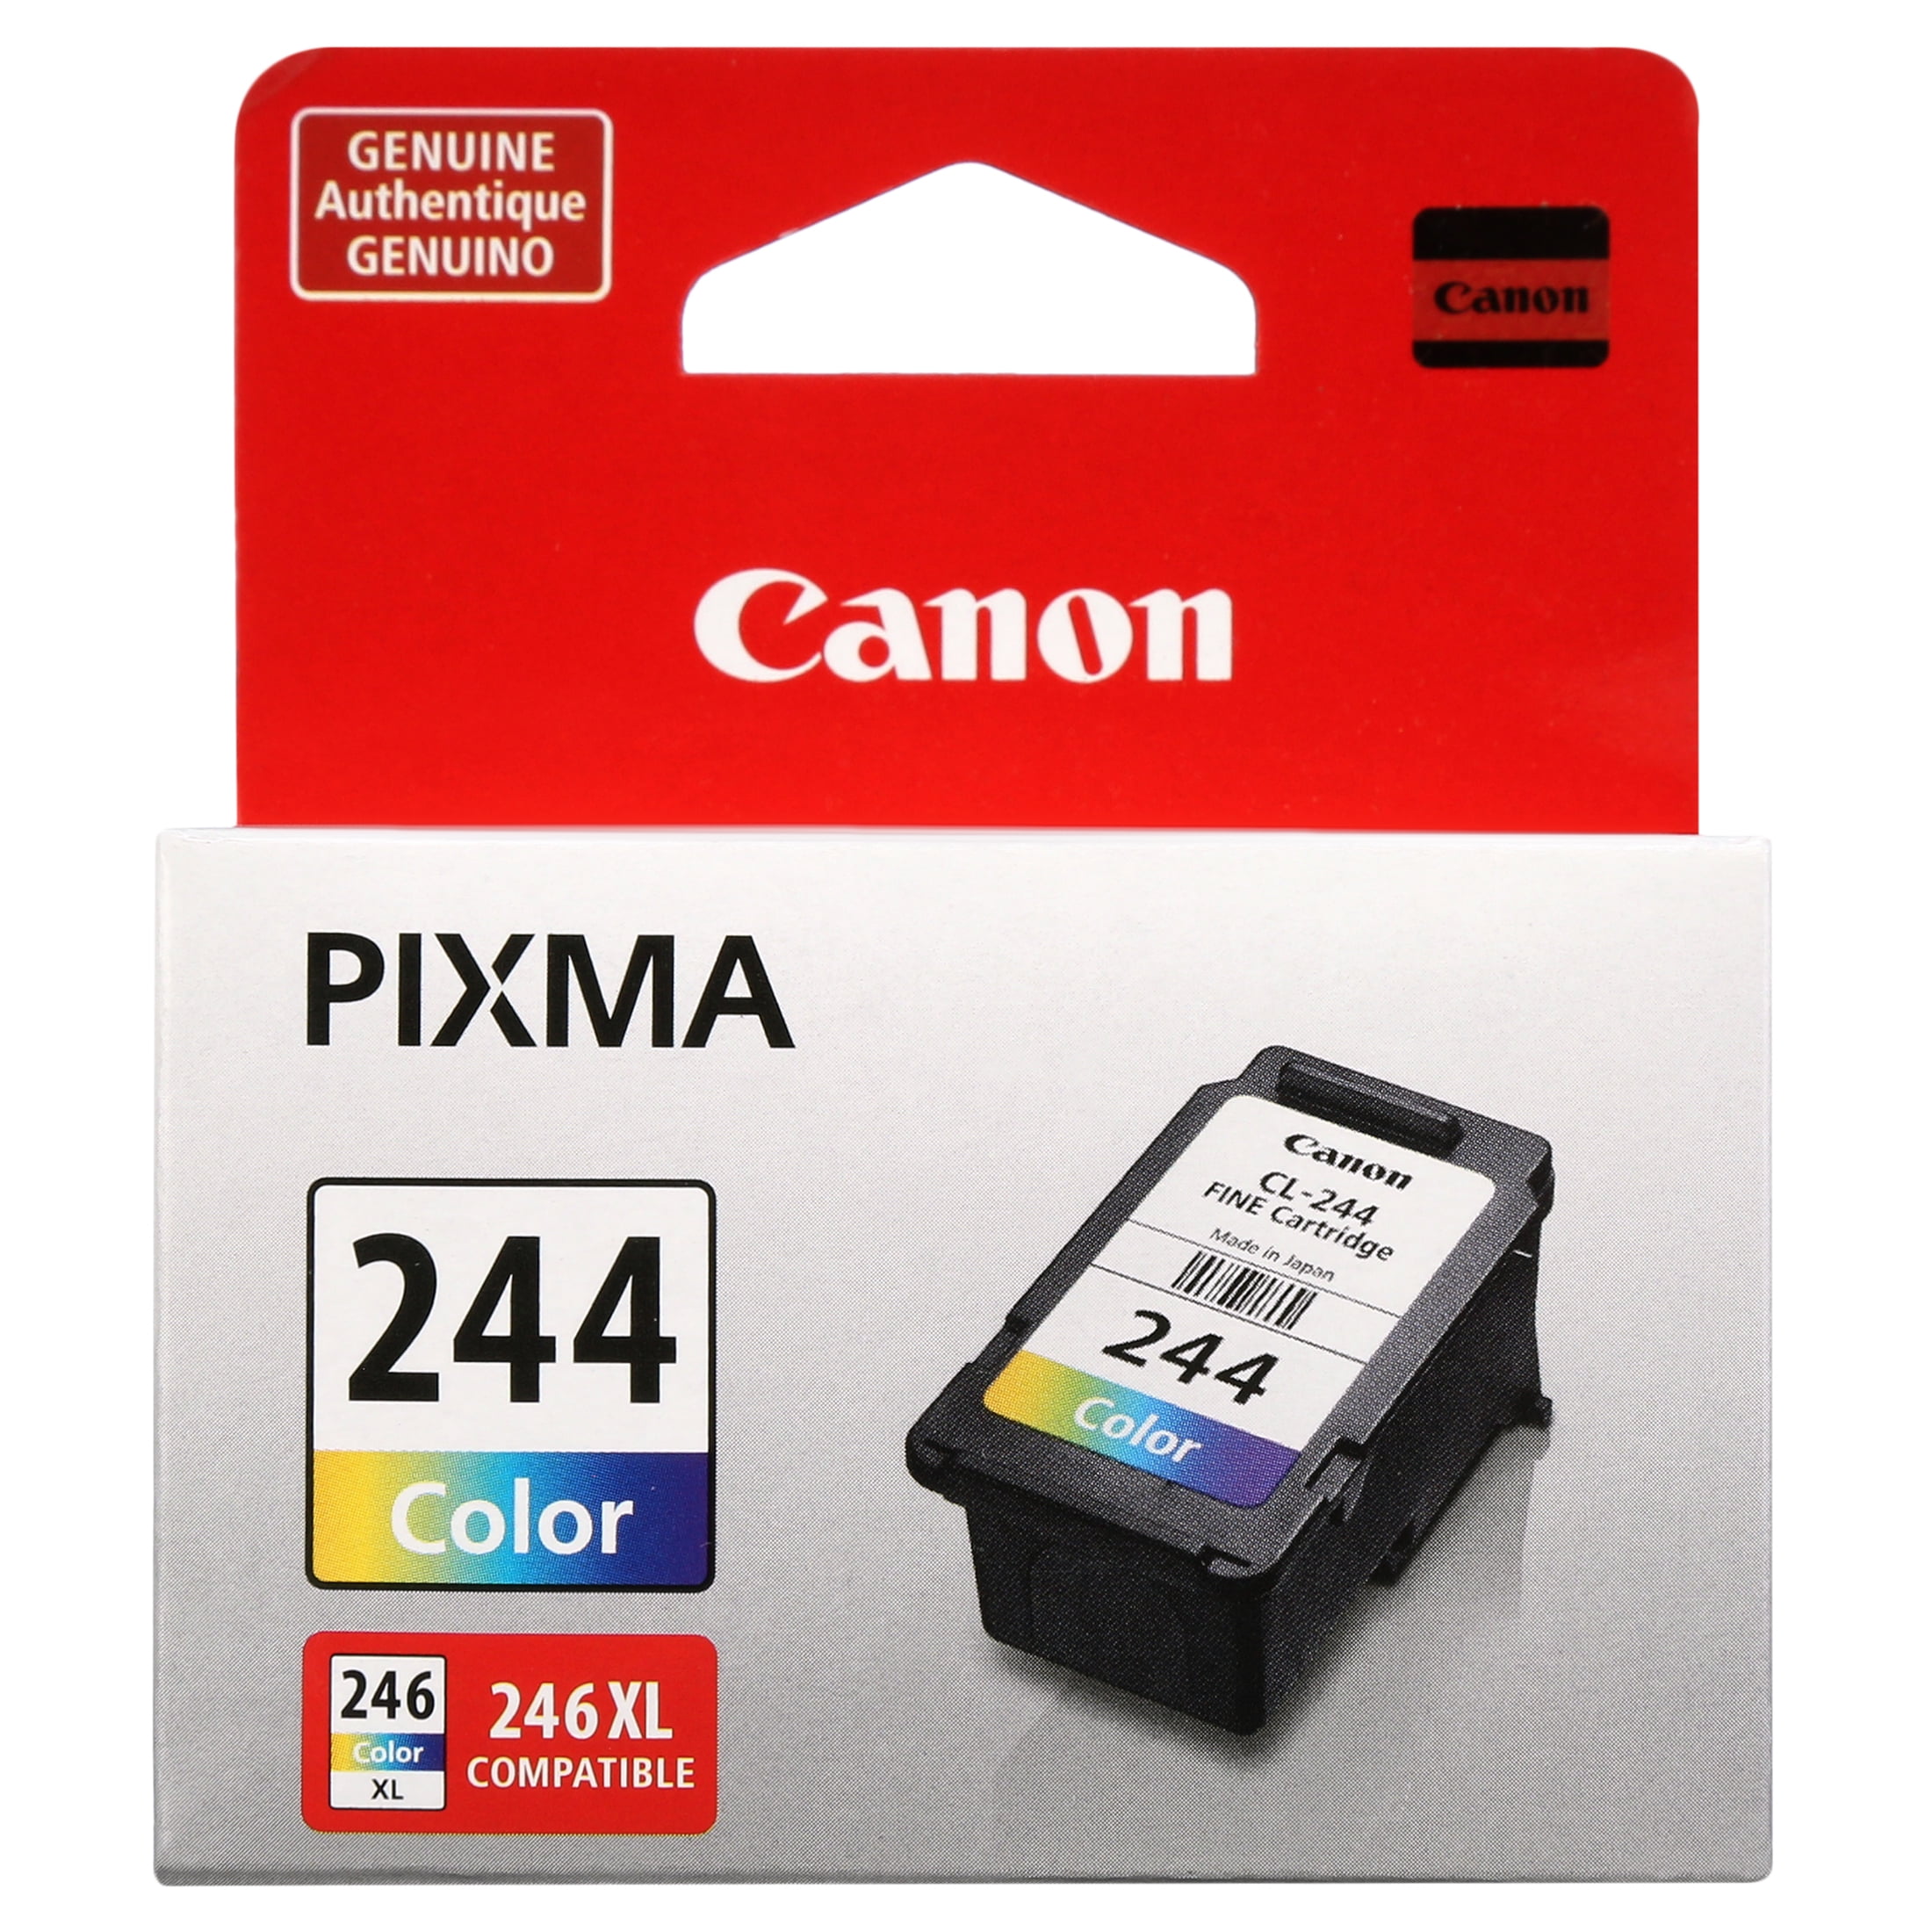 Canon Color Ink Cartridge, Compatible to iP2820, MG2420, MG2924, MG492, MG3020, MG2525, TS3120, TR4520 and TR4522 Walmart.com